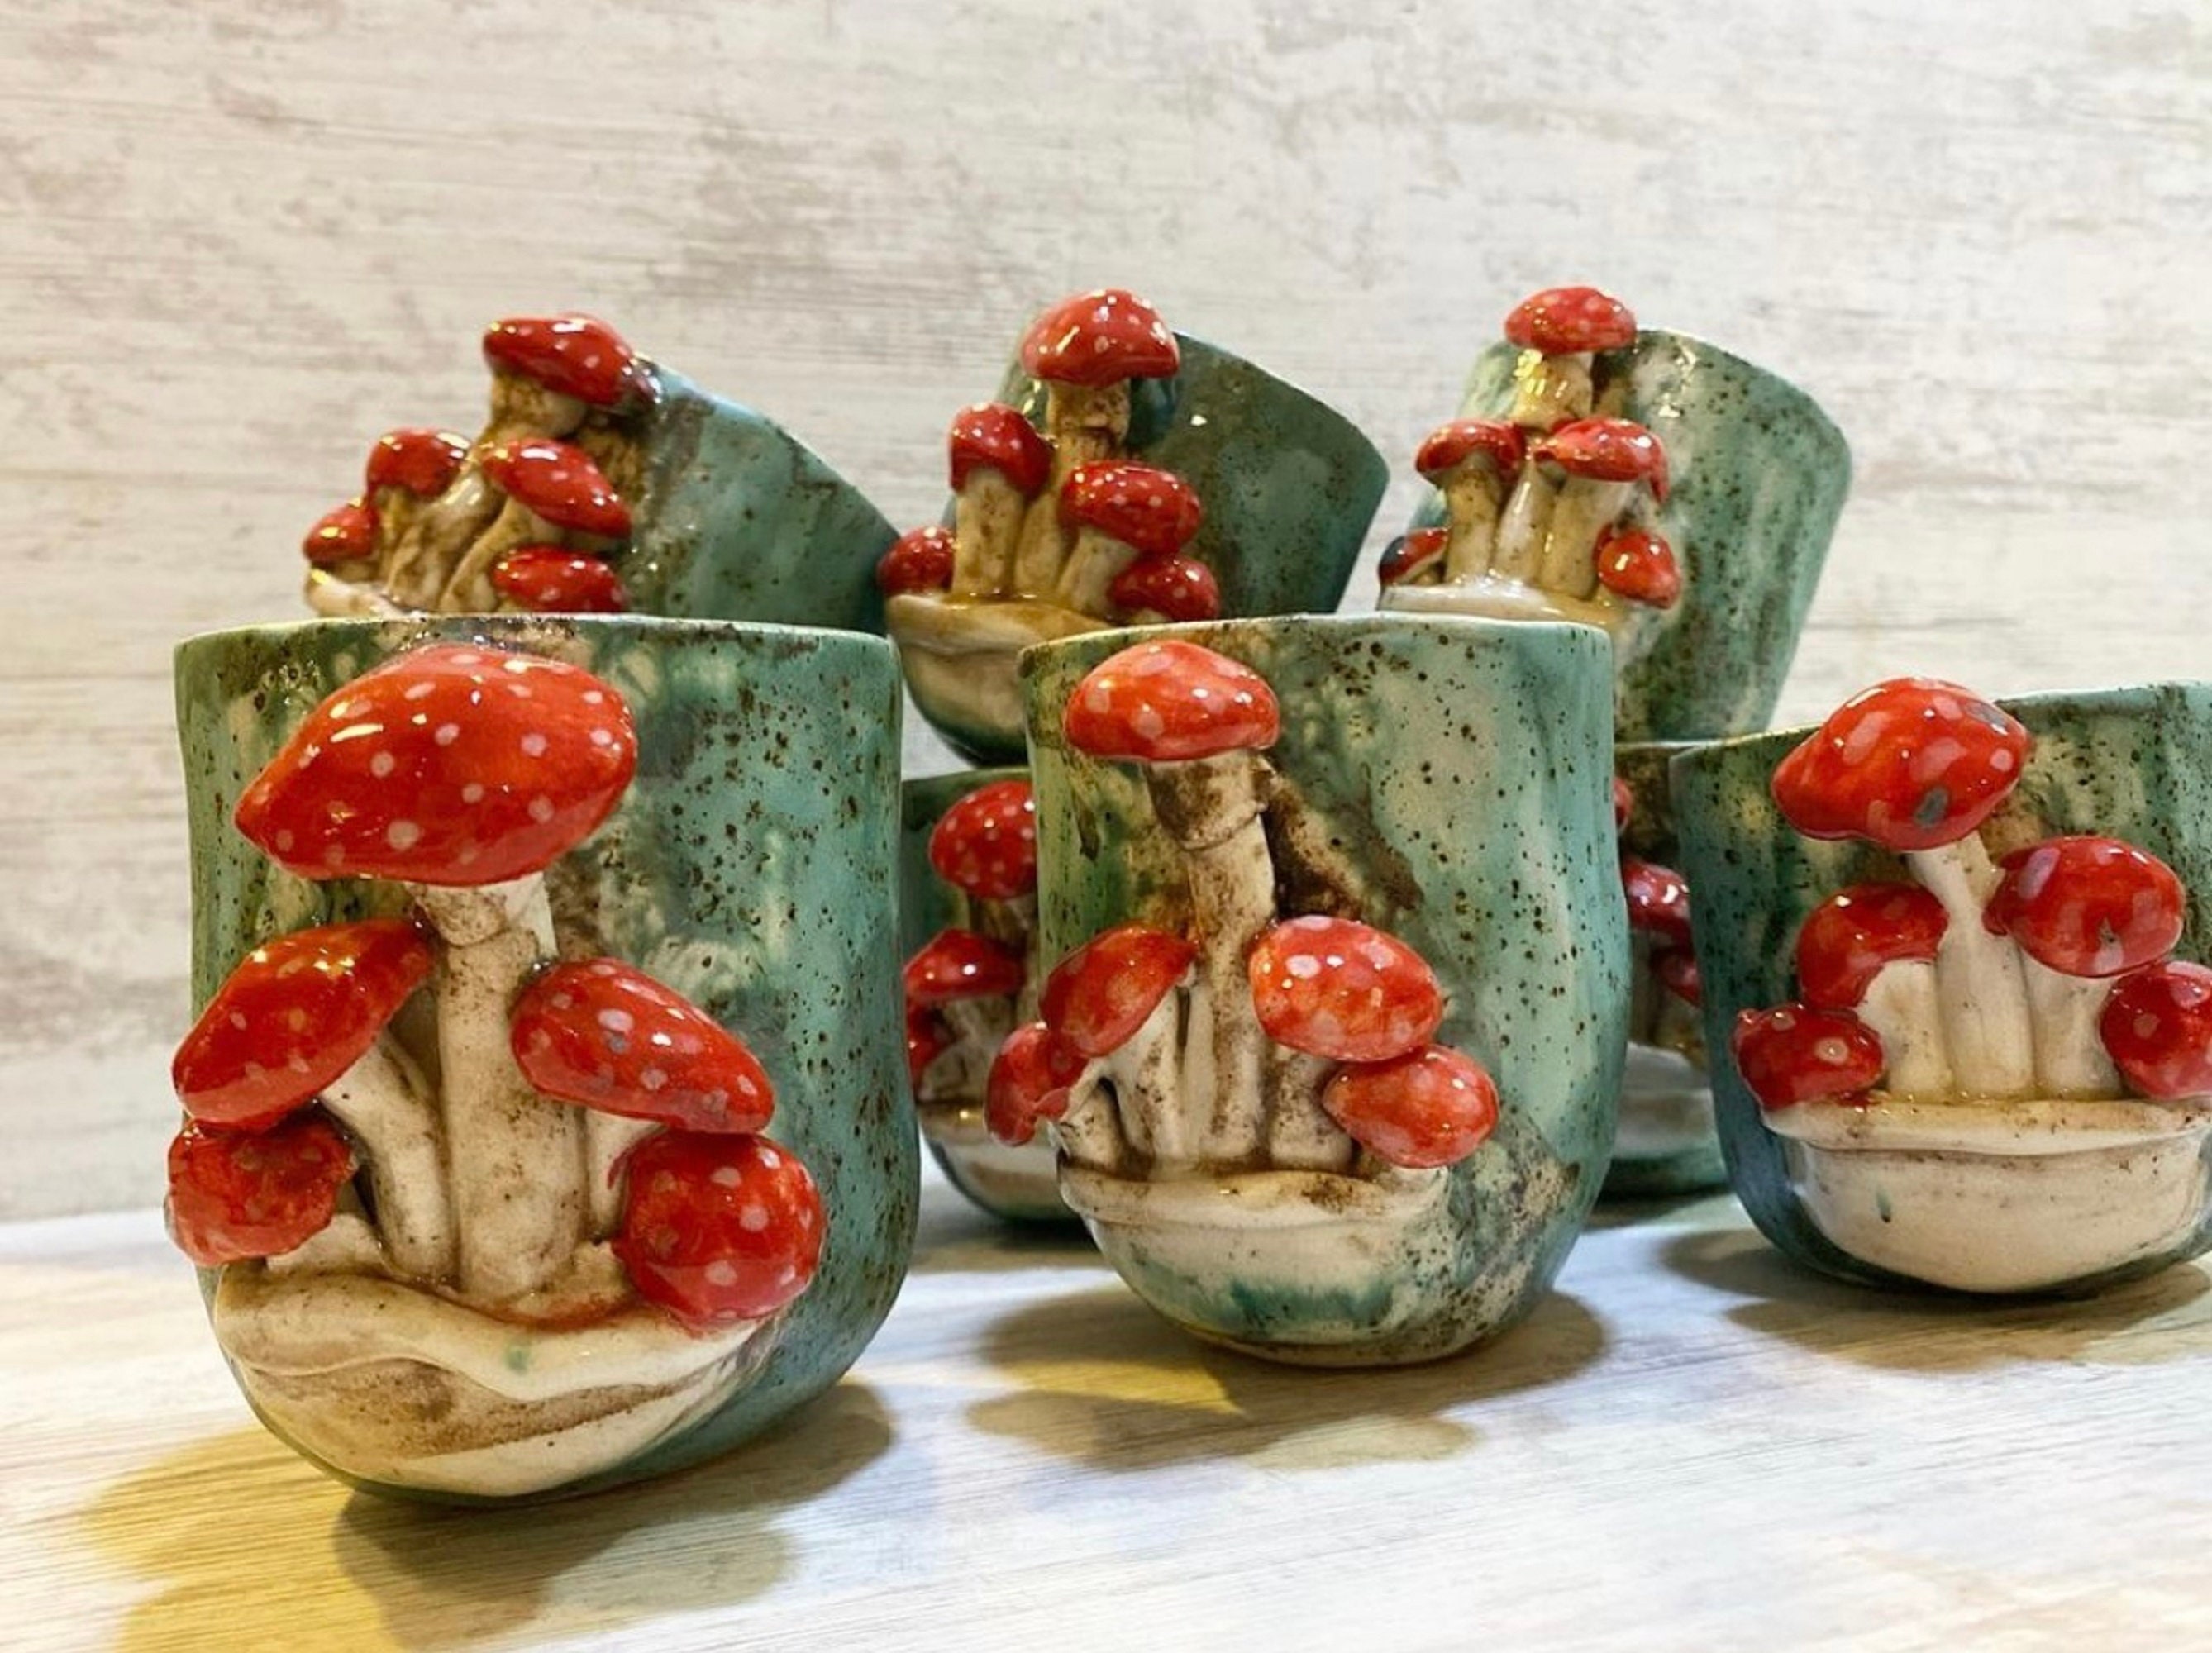 Colorful 3d Coffee Mug, Handmade Ceramic Mug, Rainbow Mug, Modern happy  coffee lover gift, Mushroom Mug, Cute Coffee Mugs, Ceramic Mug